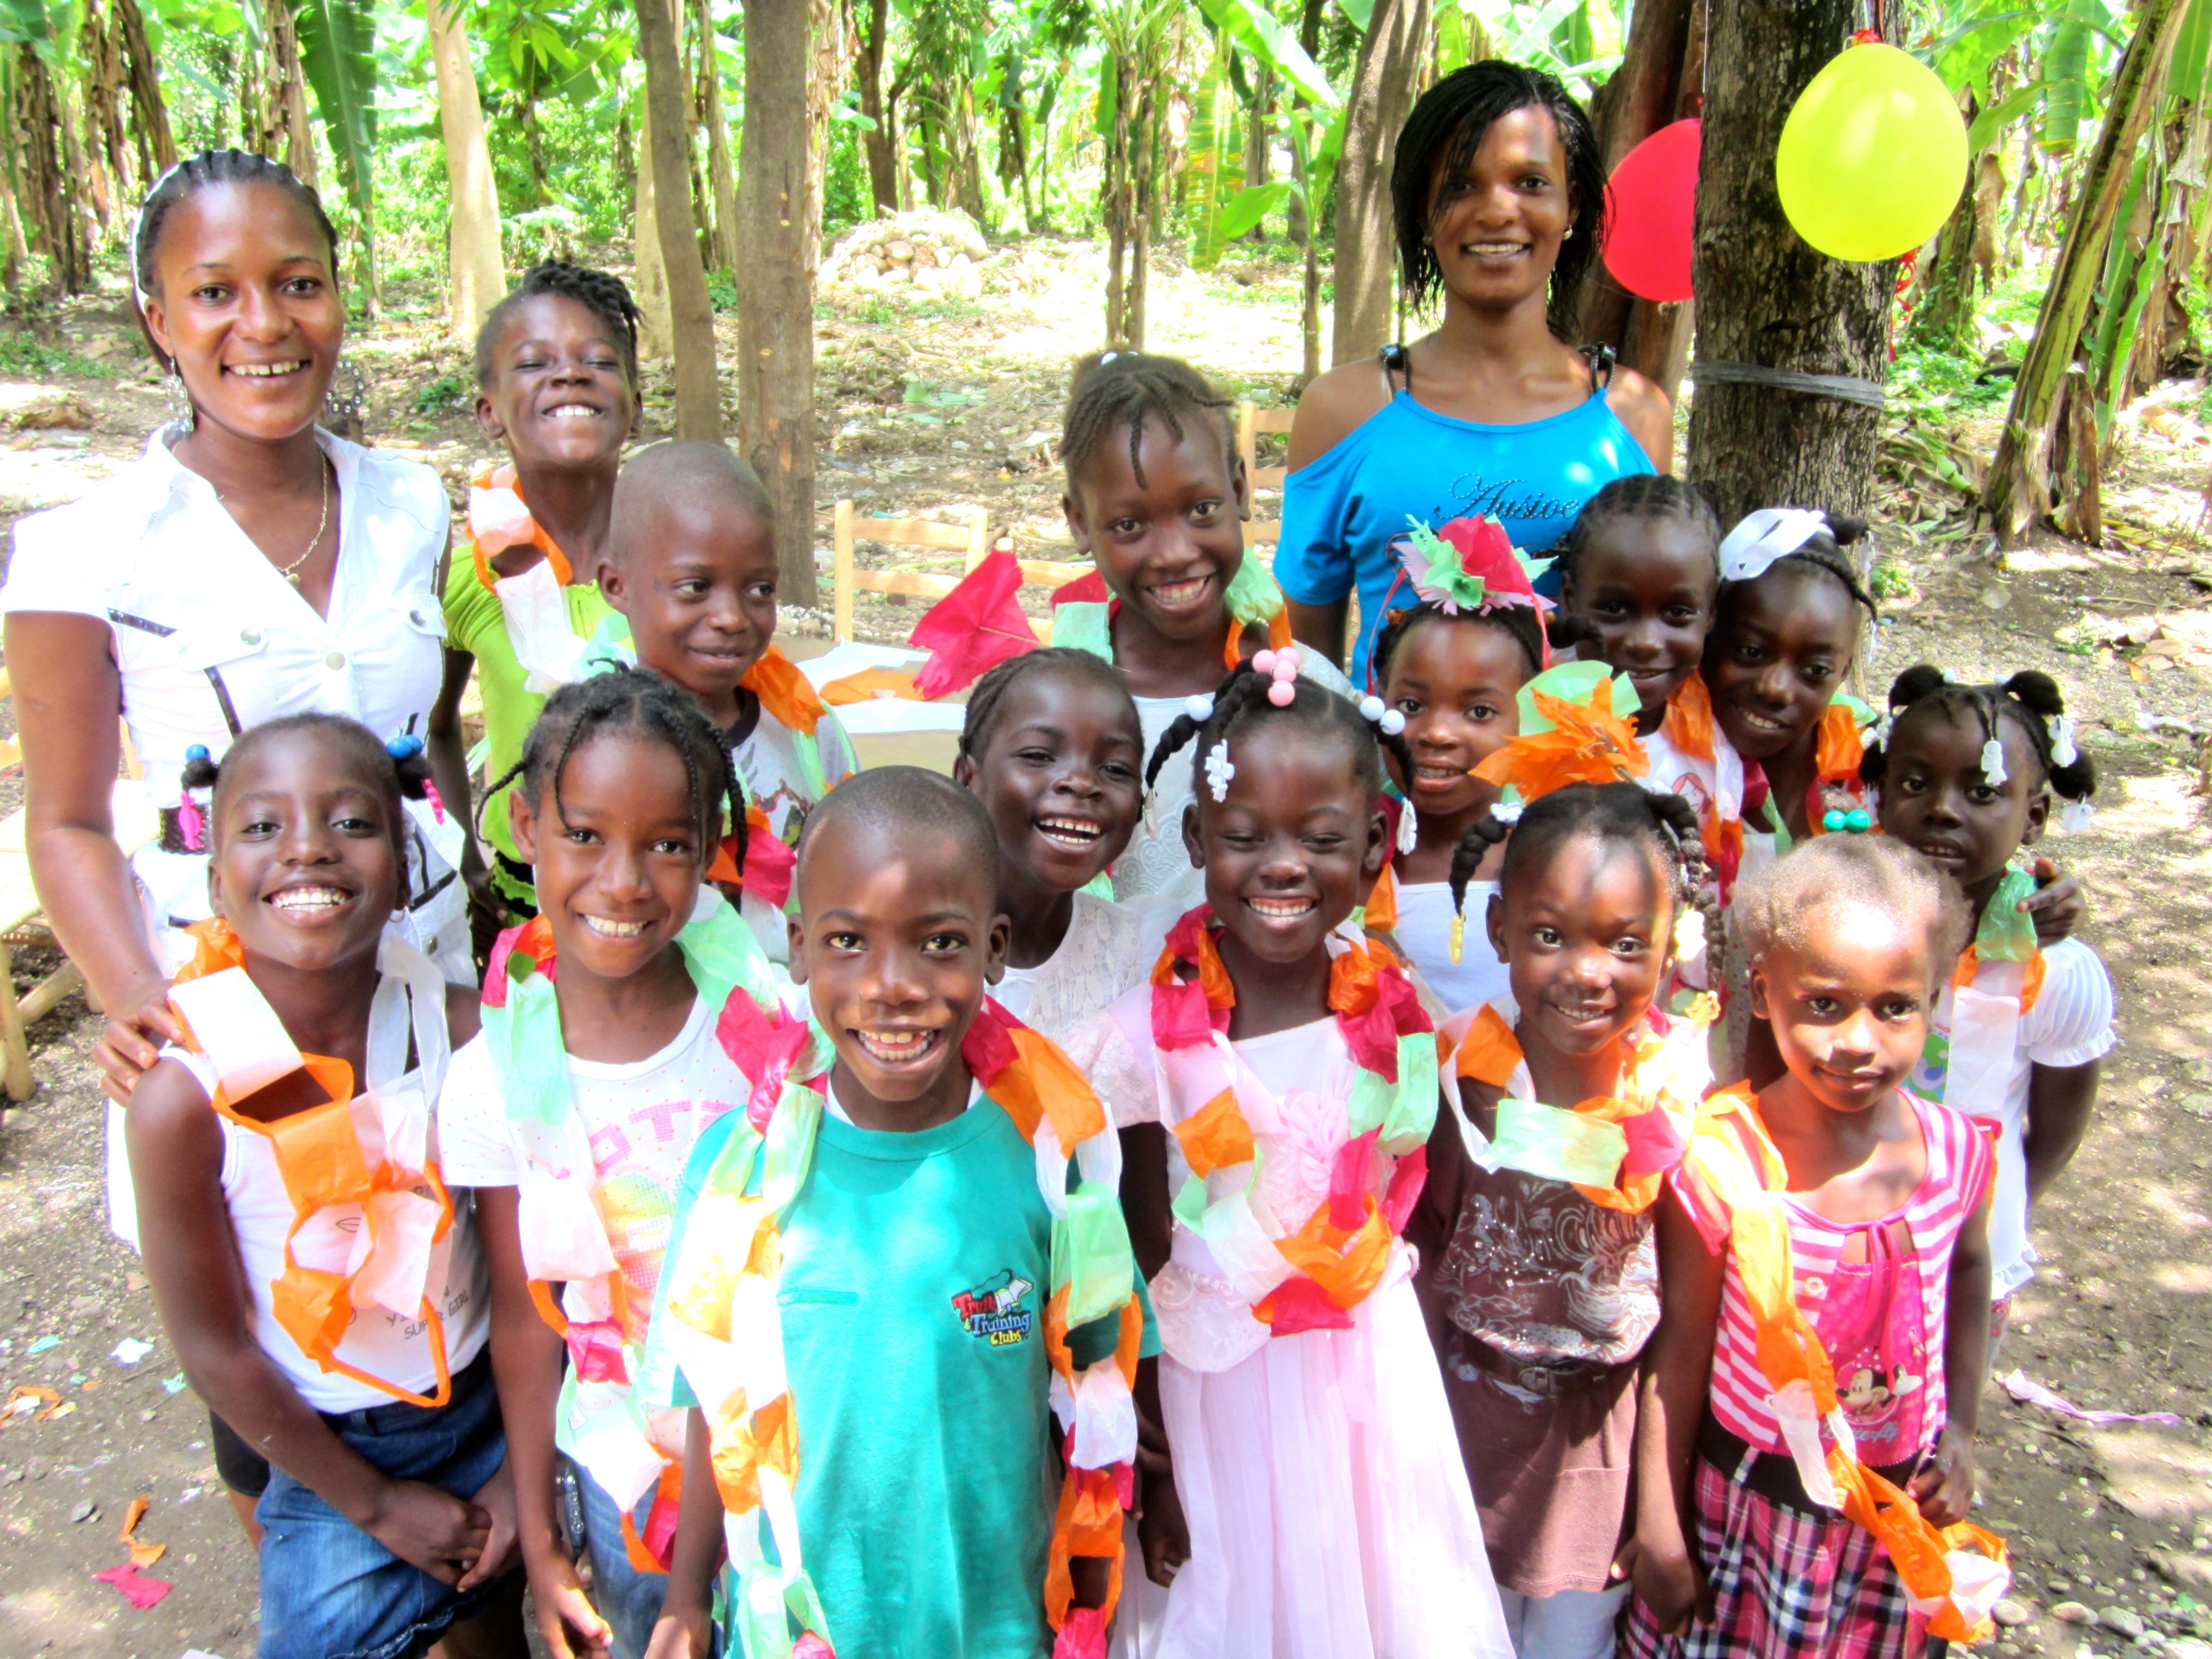 Students sponsored by Haitian Educational Initiatives in Jacmel, Haiti